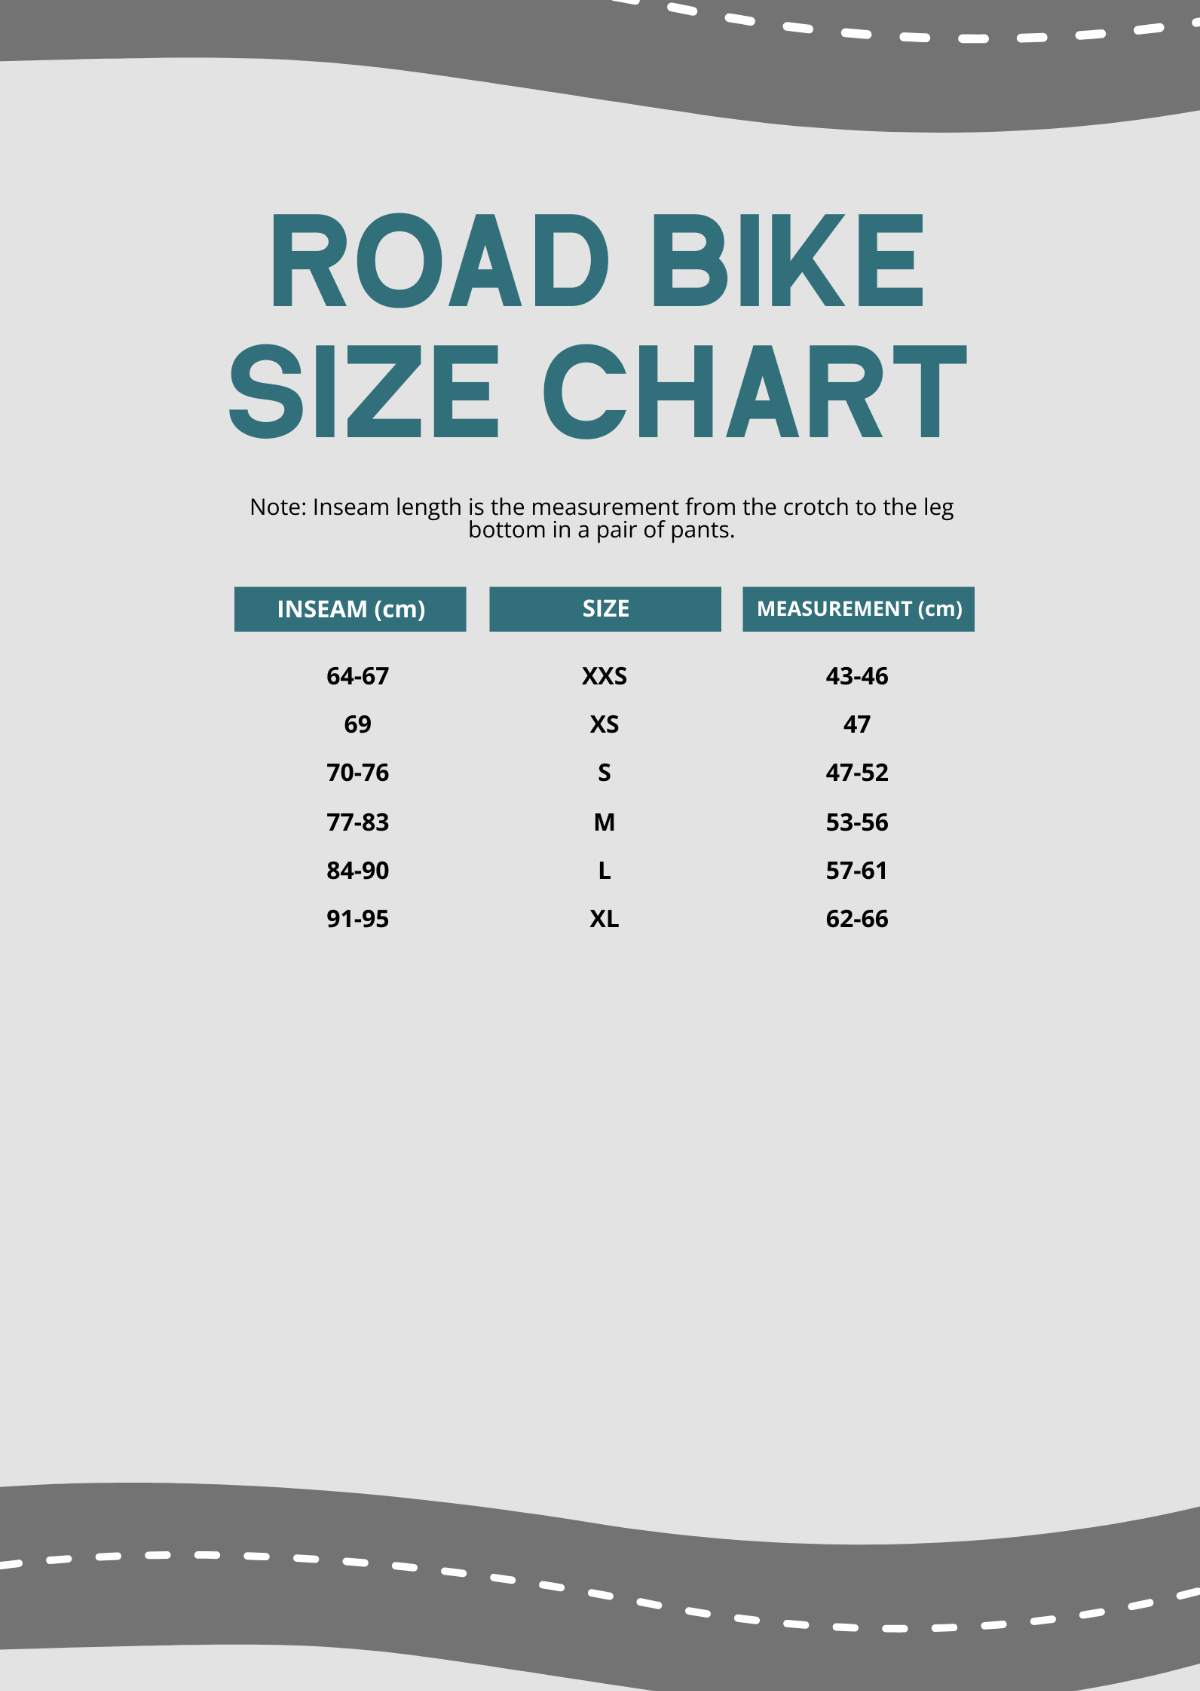 Road Bike Size Chart Template